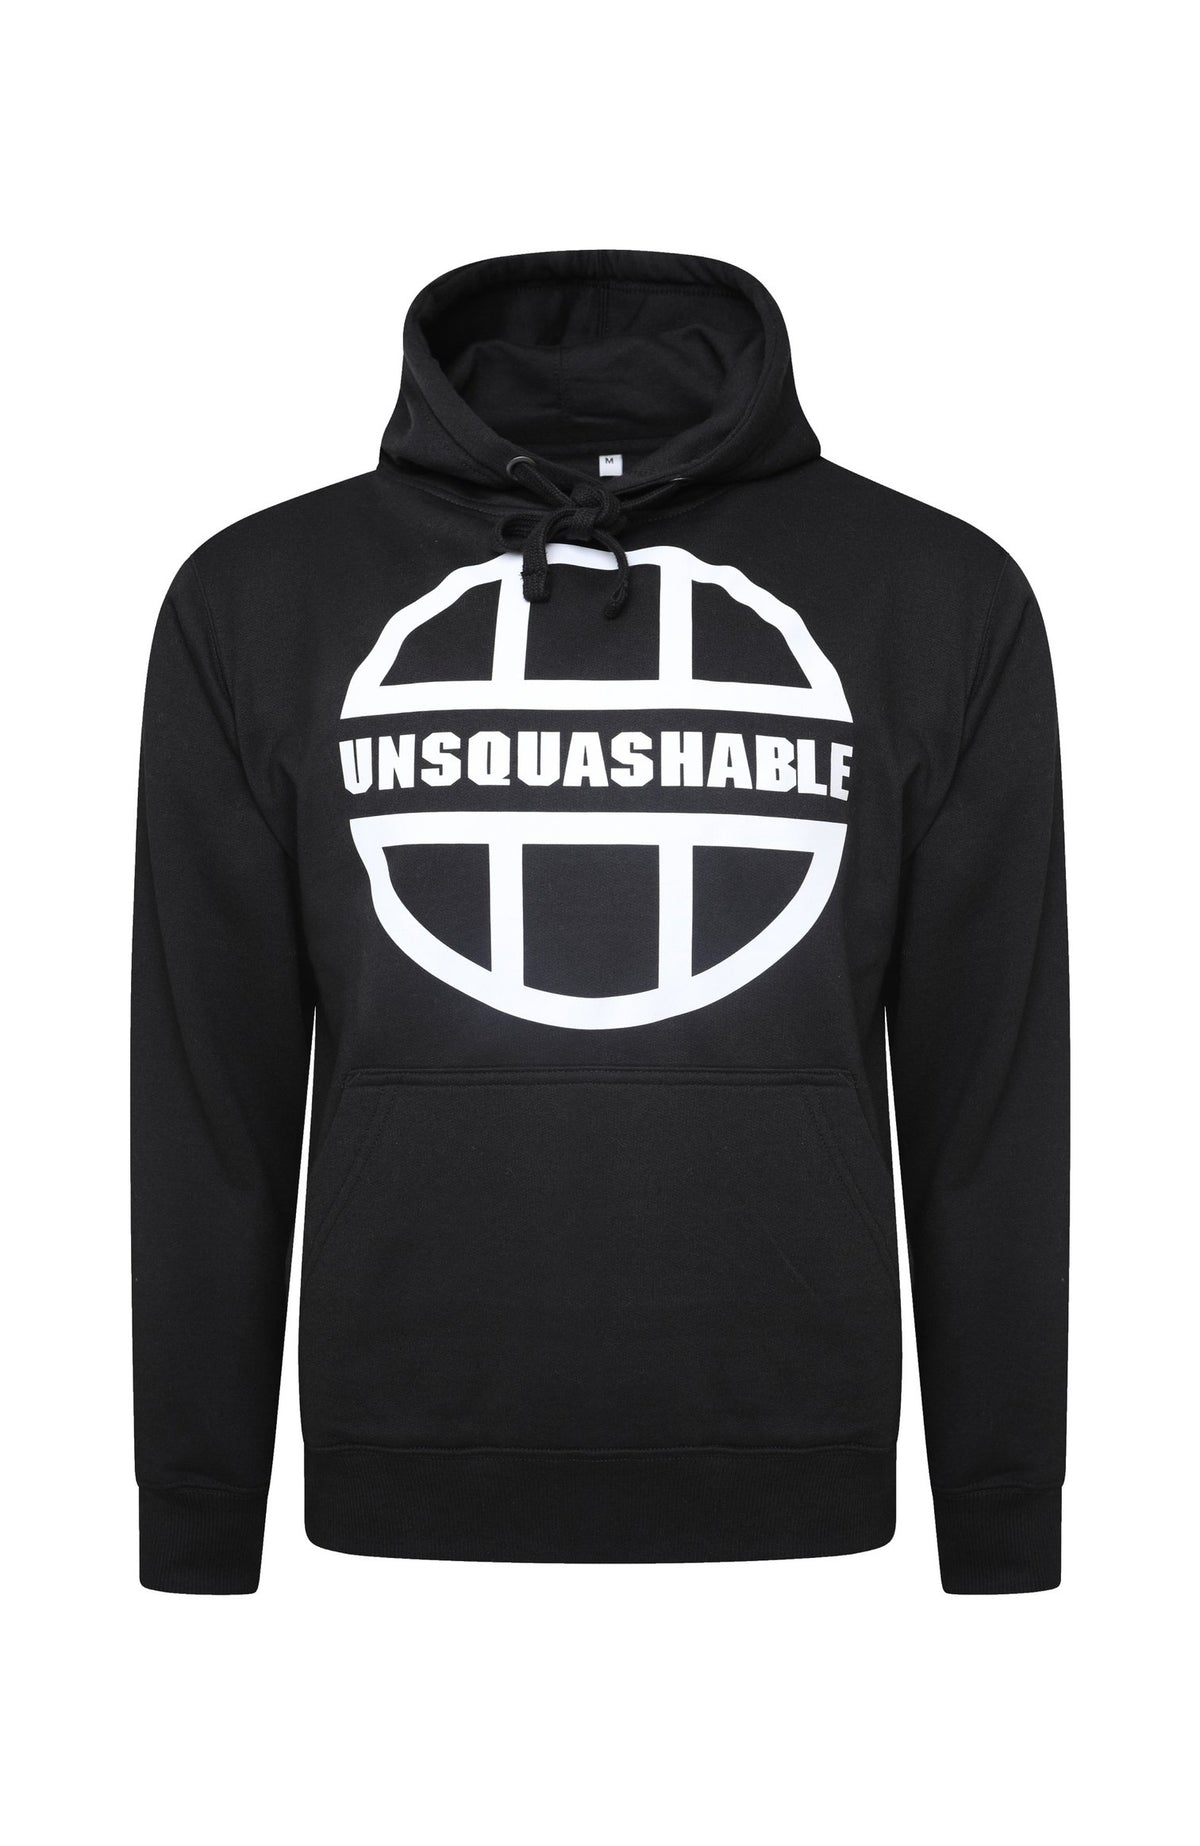 UNSQUASHABLE Original Hoodie - black and white logo